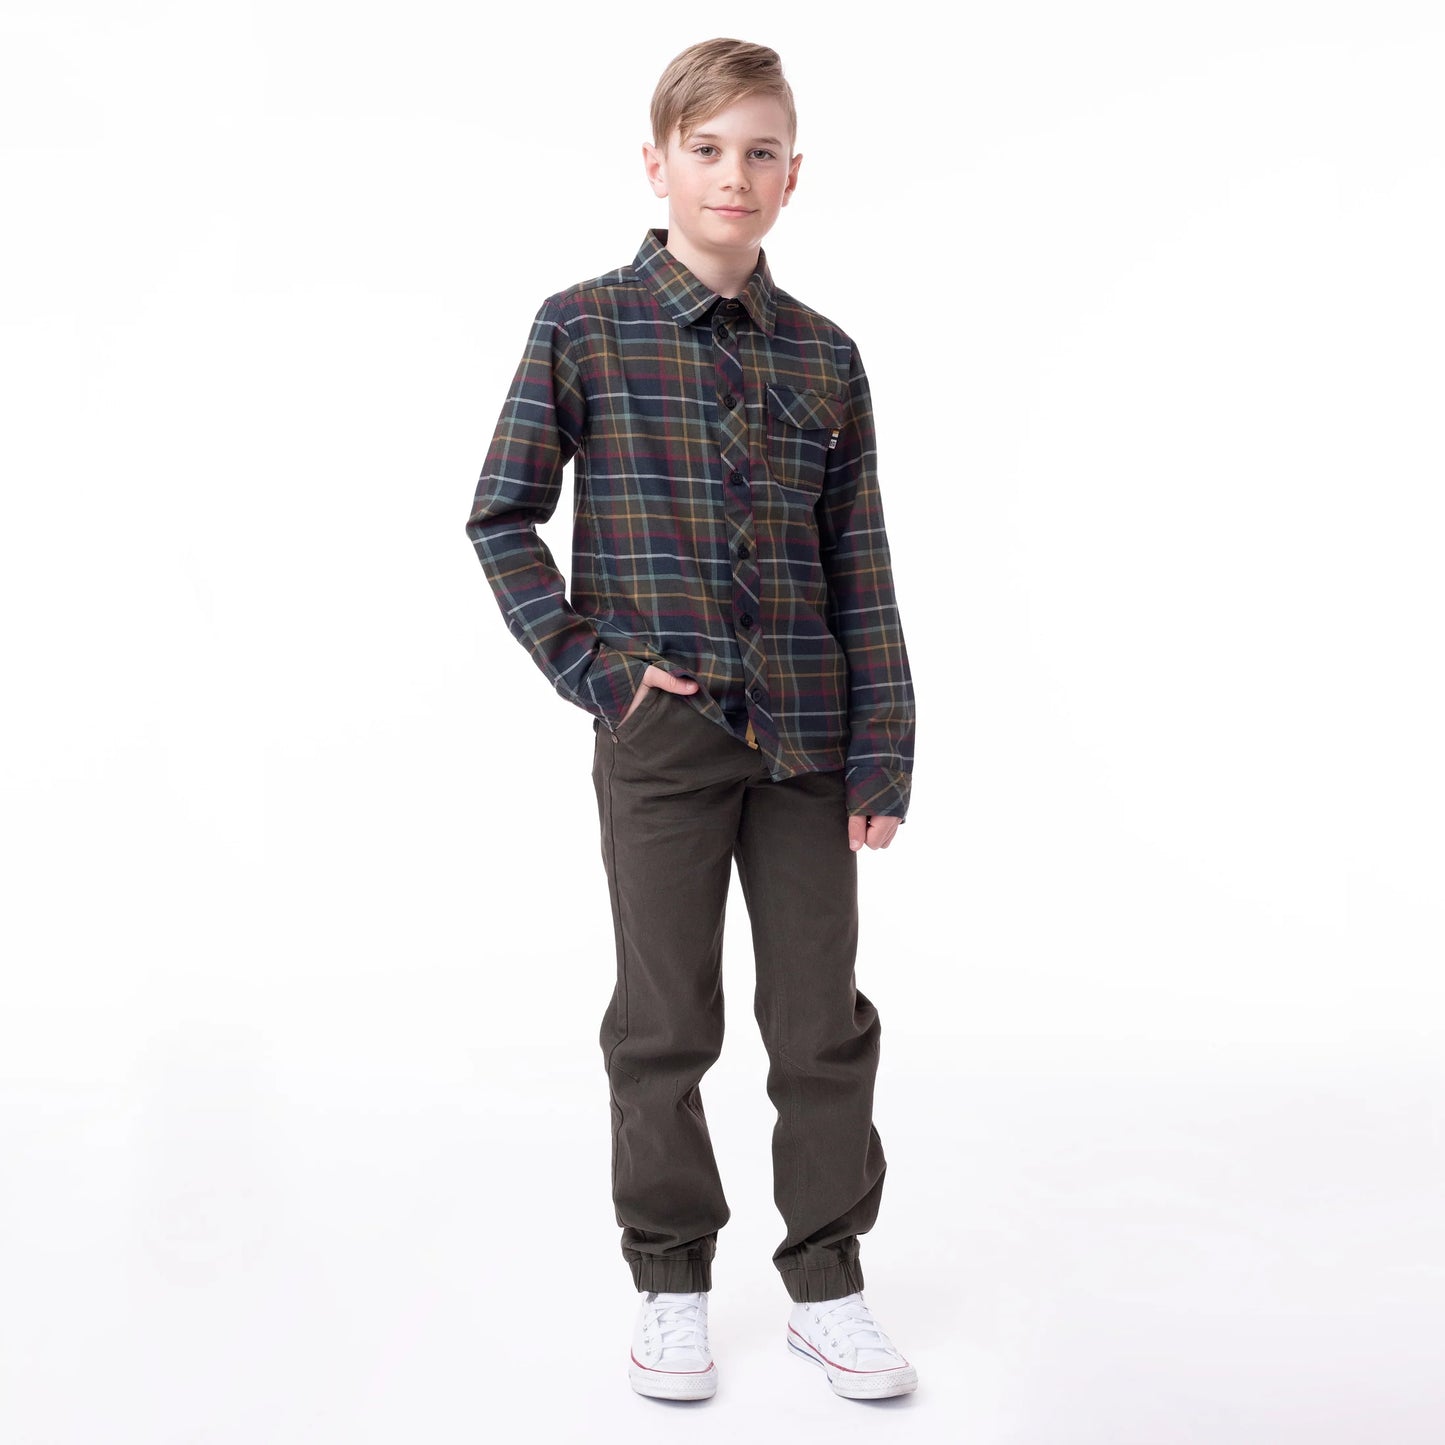 Nanö plaid shirt for boys 7 to 14 years